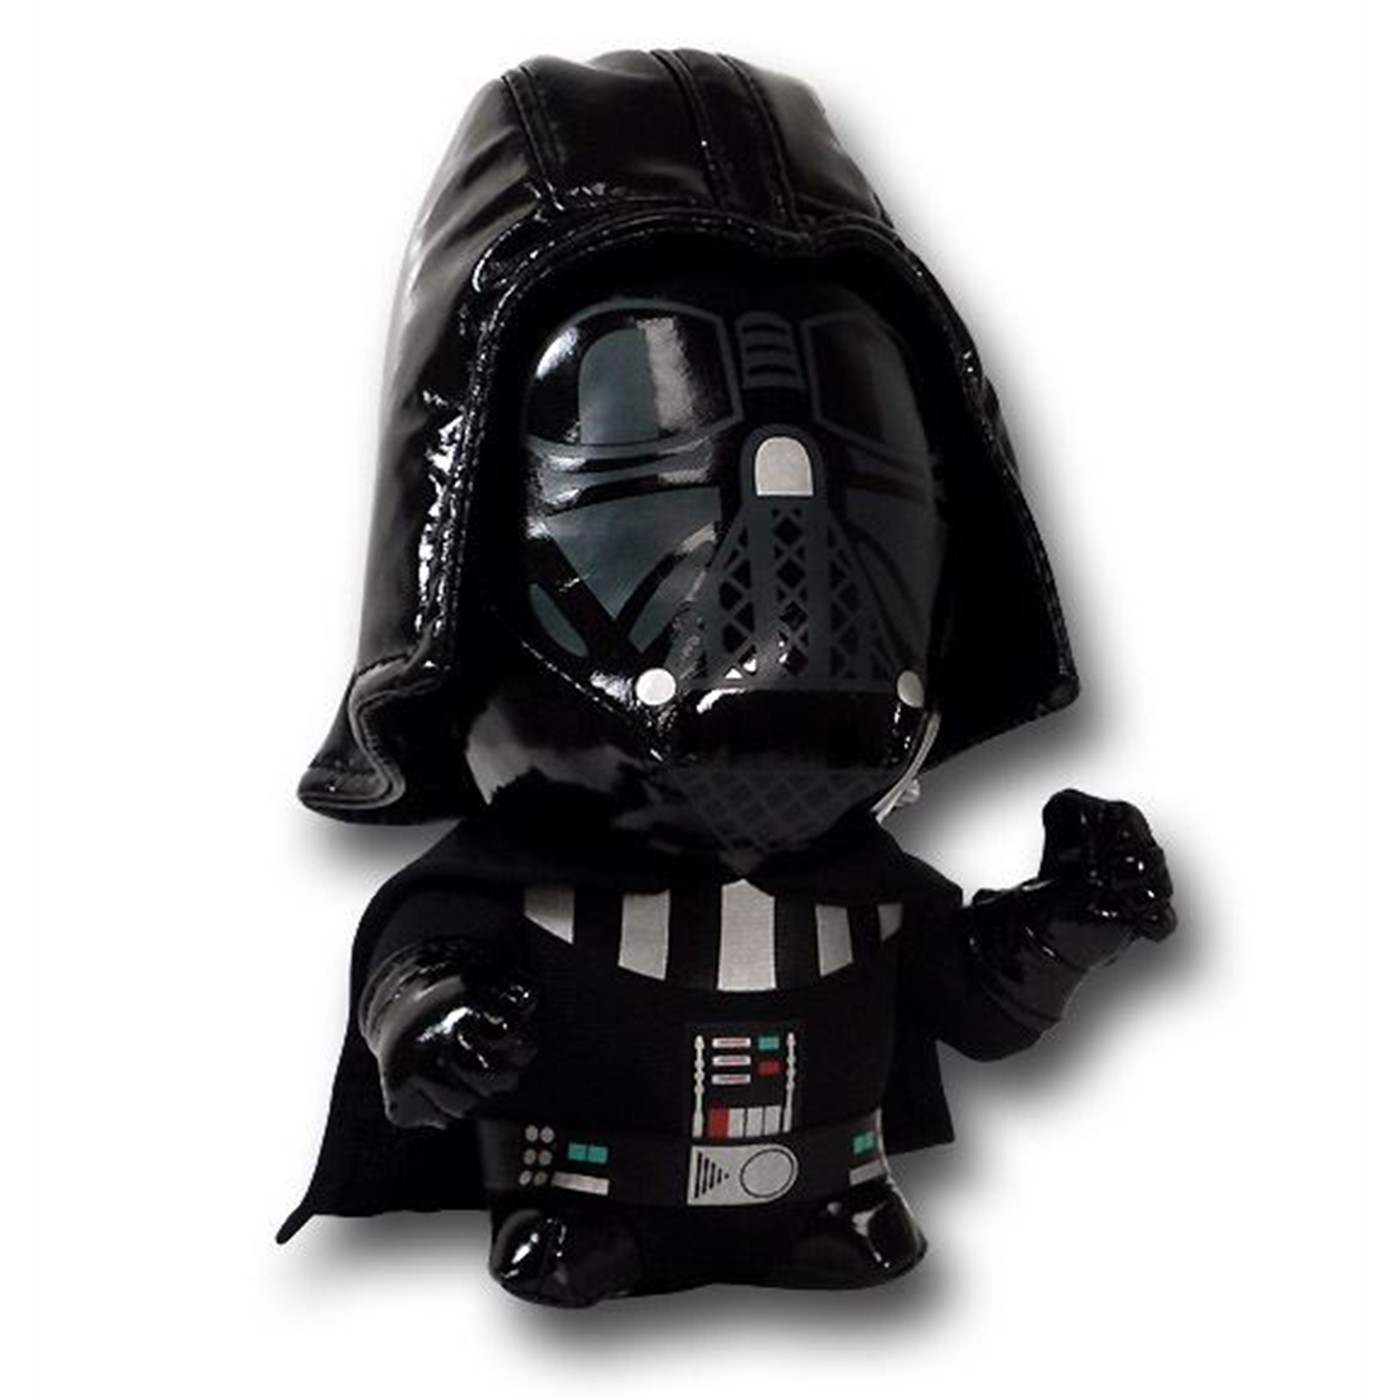 Star Wars Darth Vader Super Deformed Plush Toy